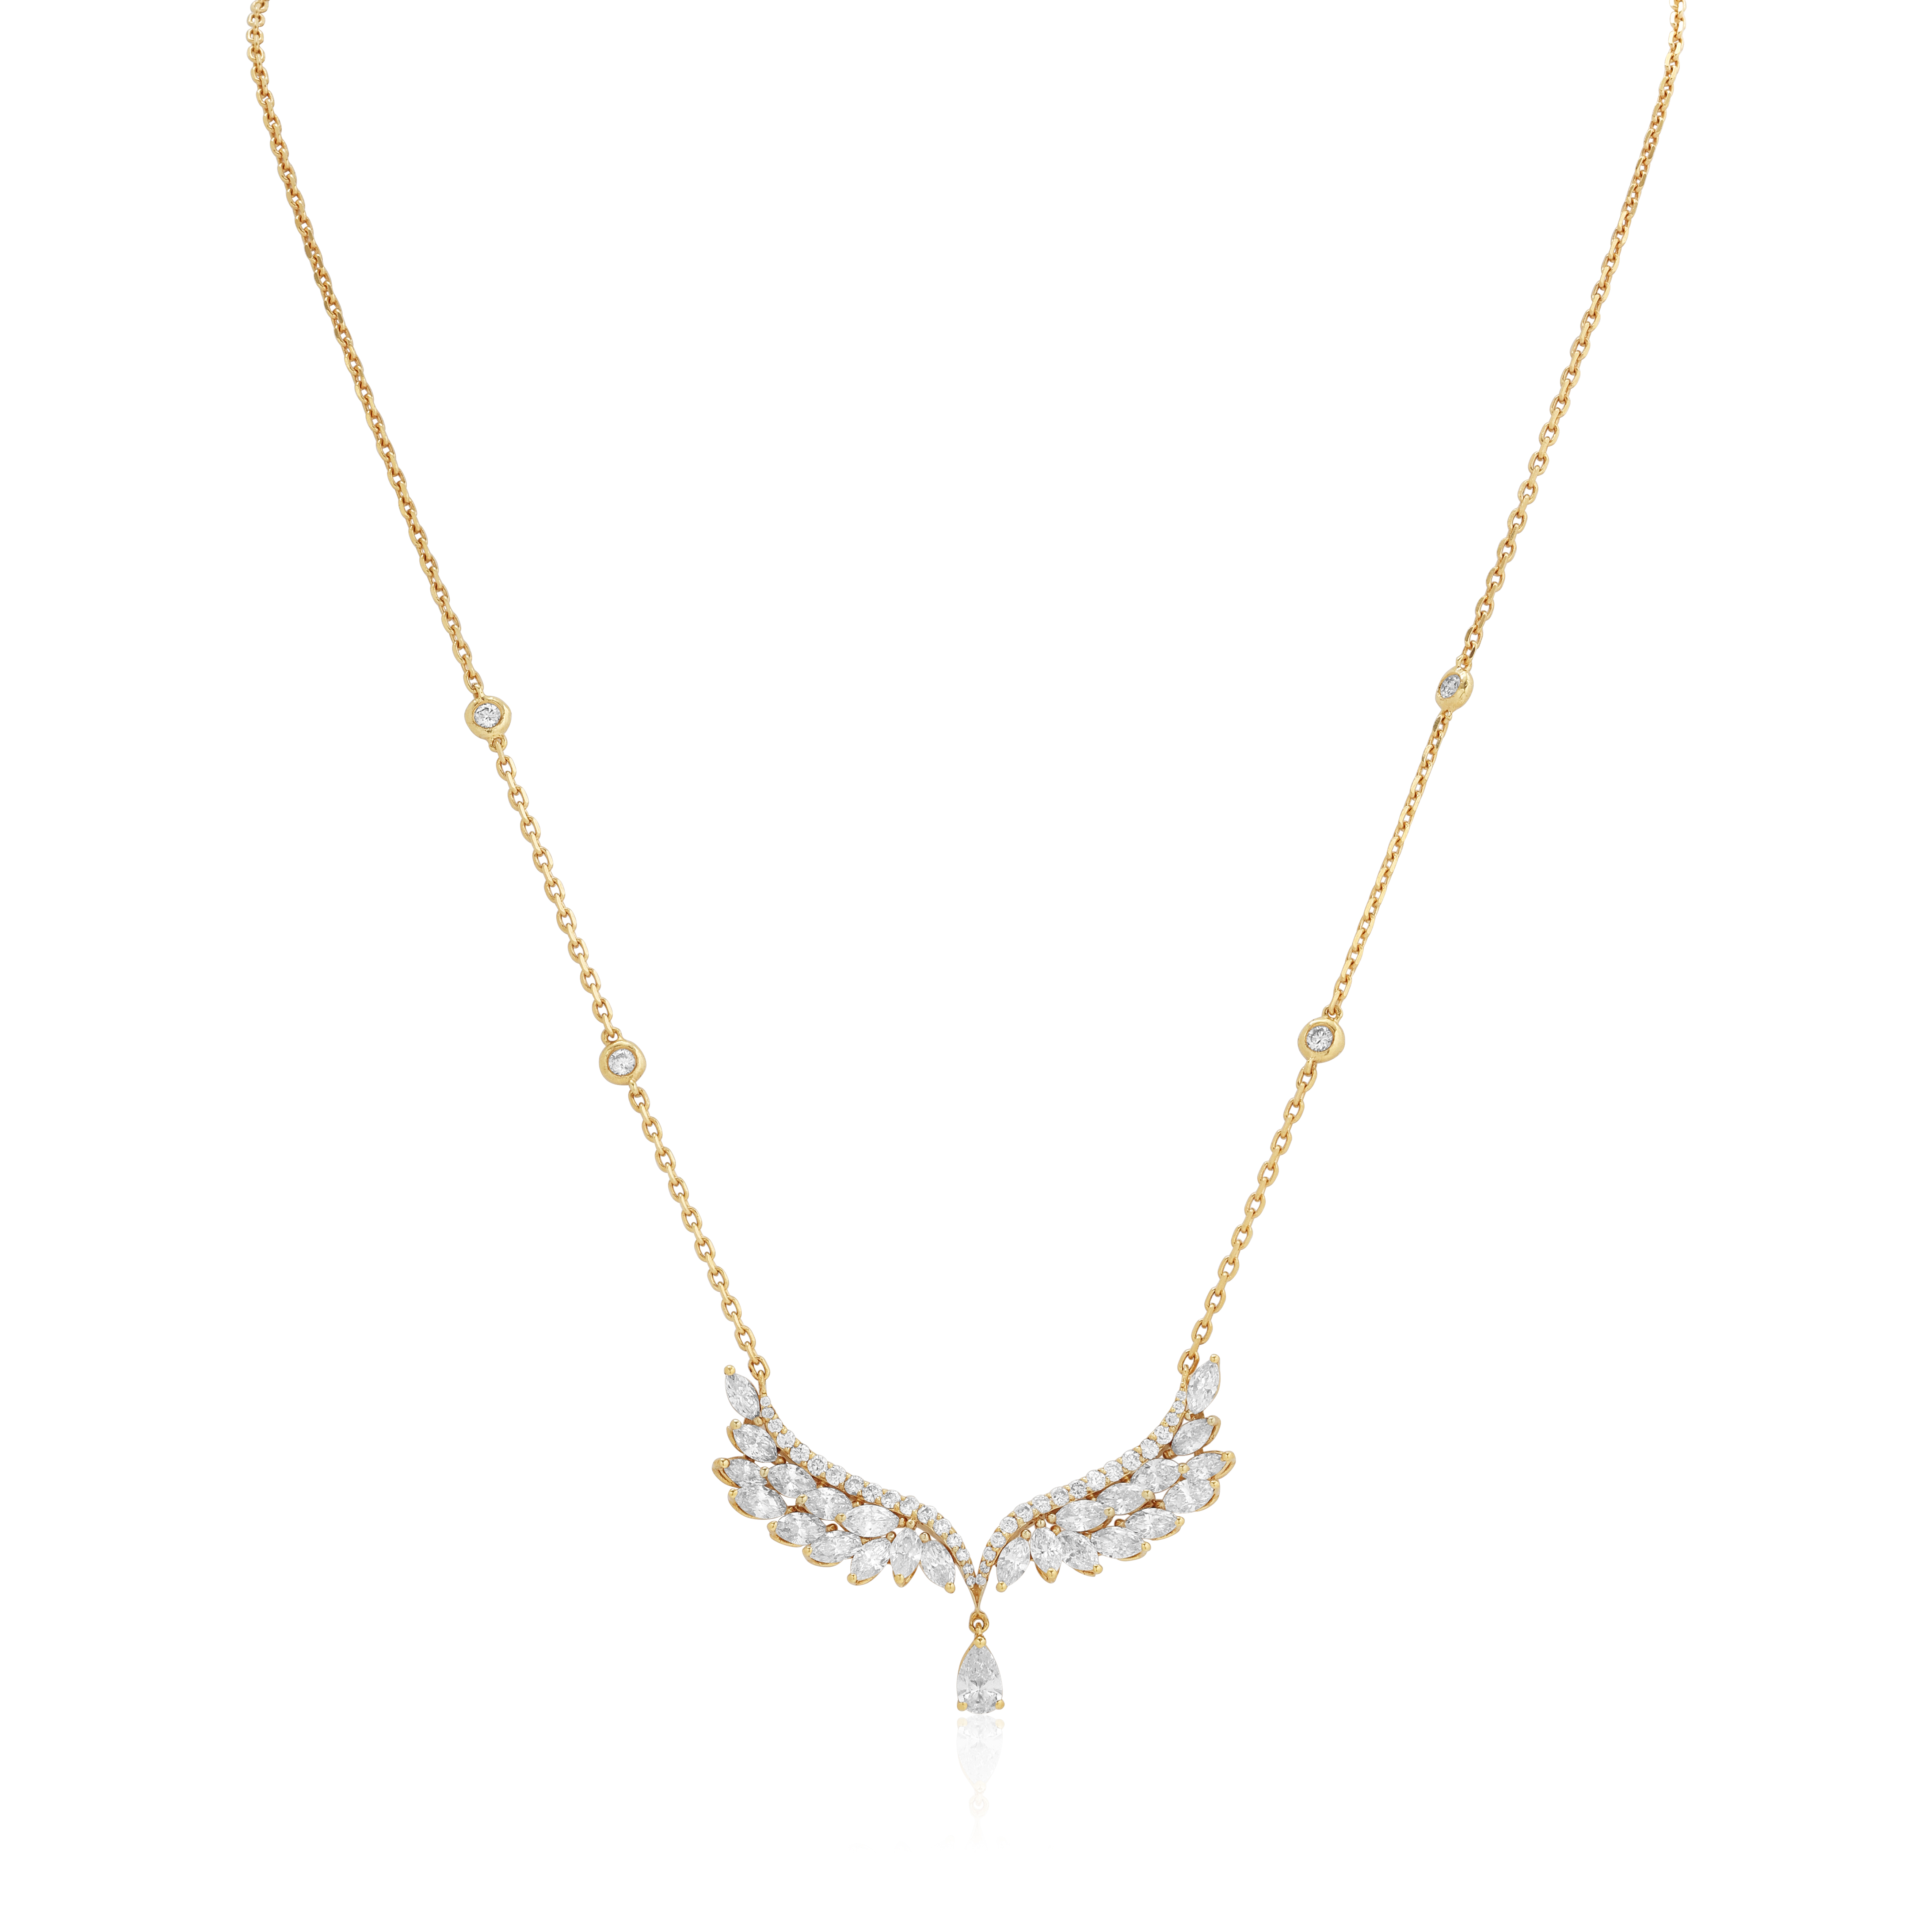 Yvan Tufenkjian 18k Yellow Gold and Diamond Pendant Necklace